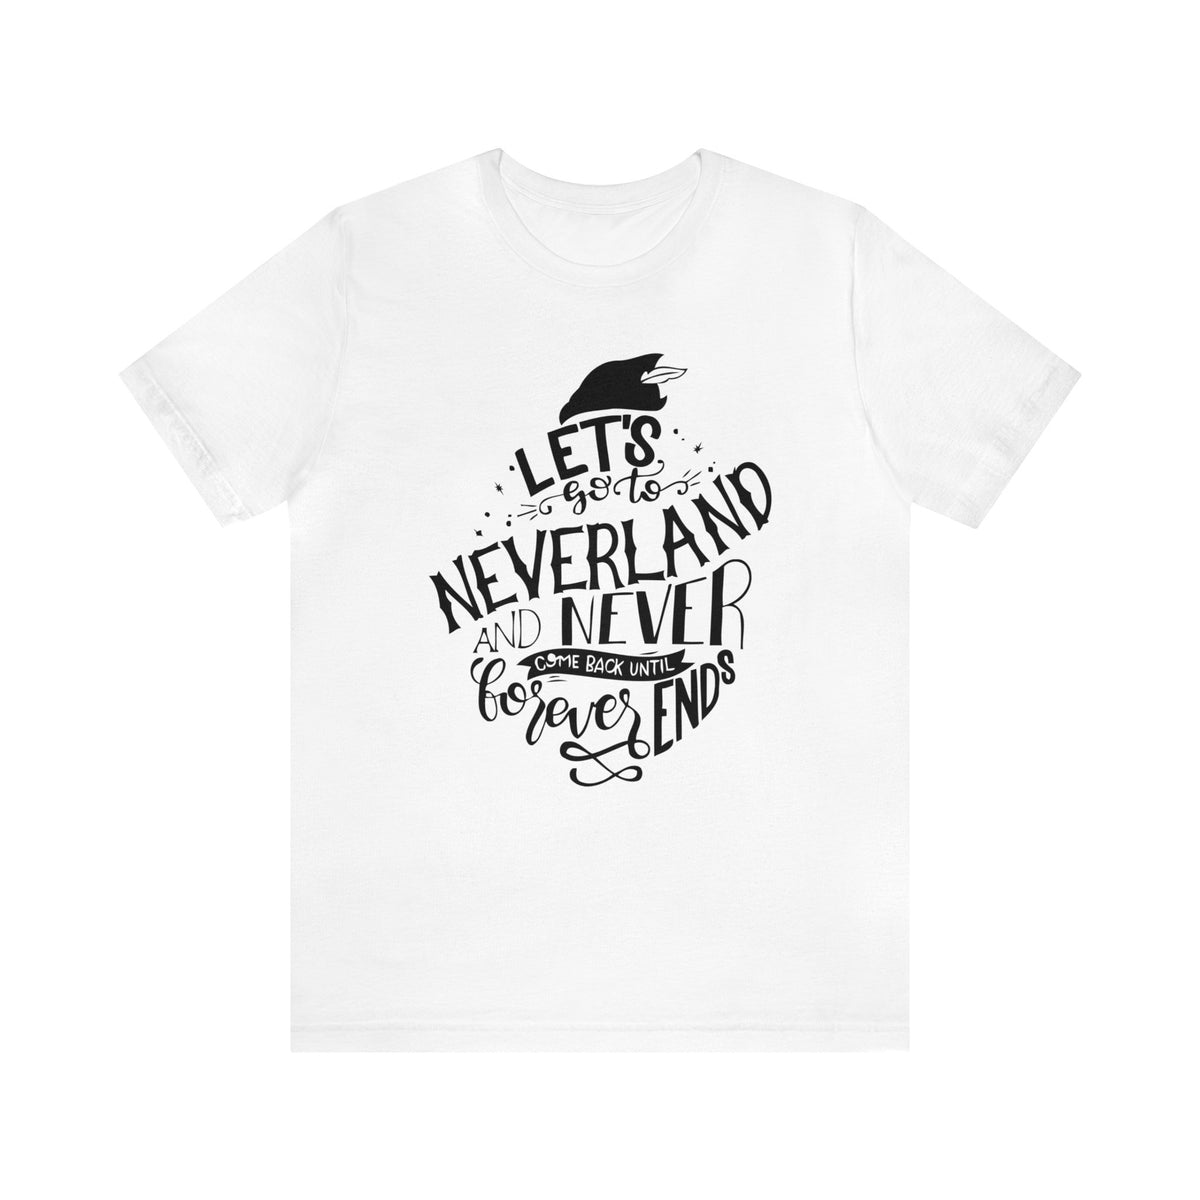 Neverland Bella Canvas Unisex Jersey Short Sleeve Tee